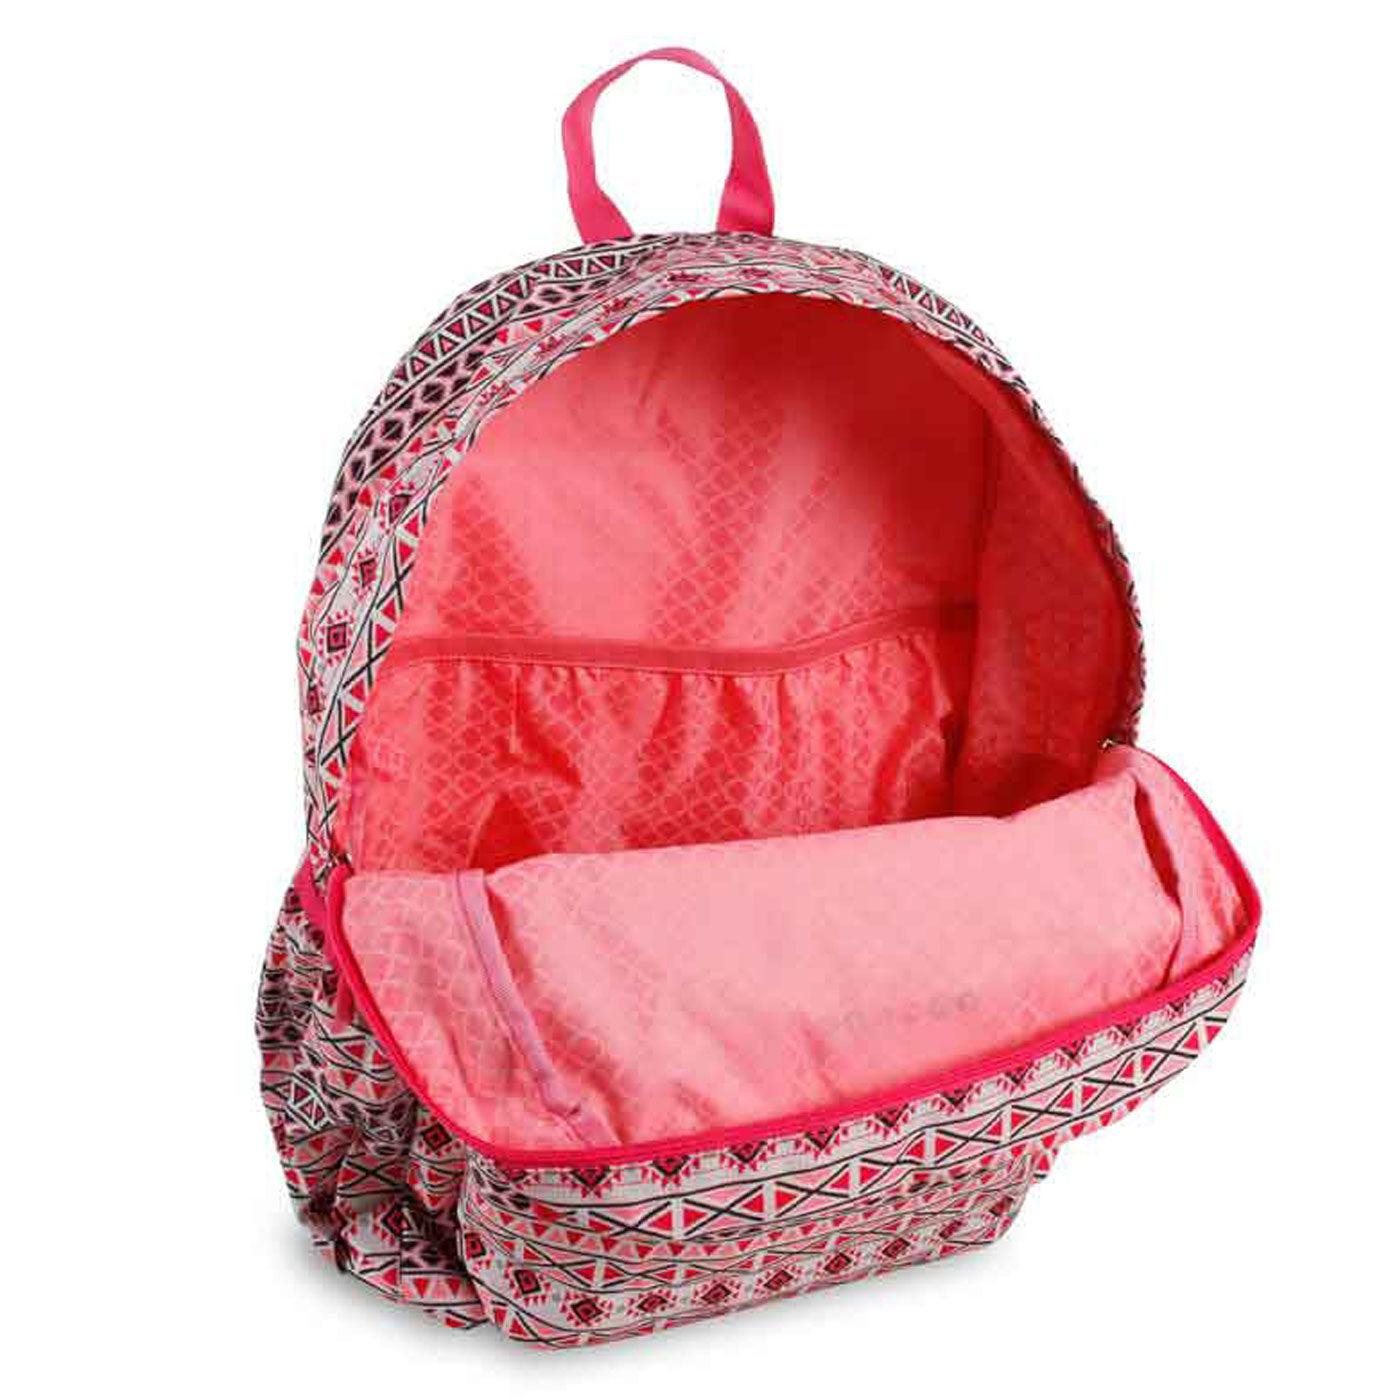 J World New York Students Backpack 25L Oz Skandi Pink